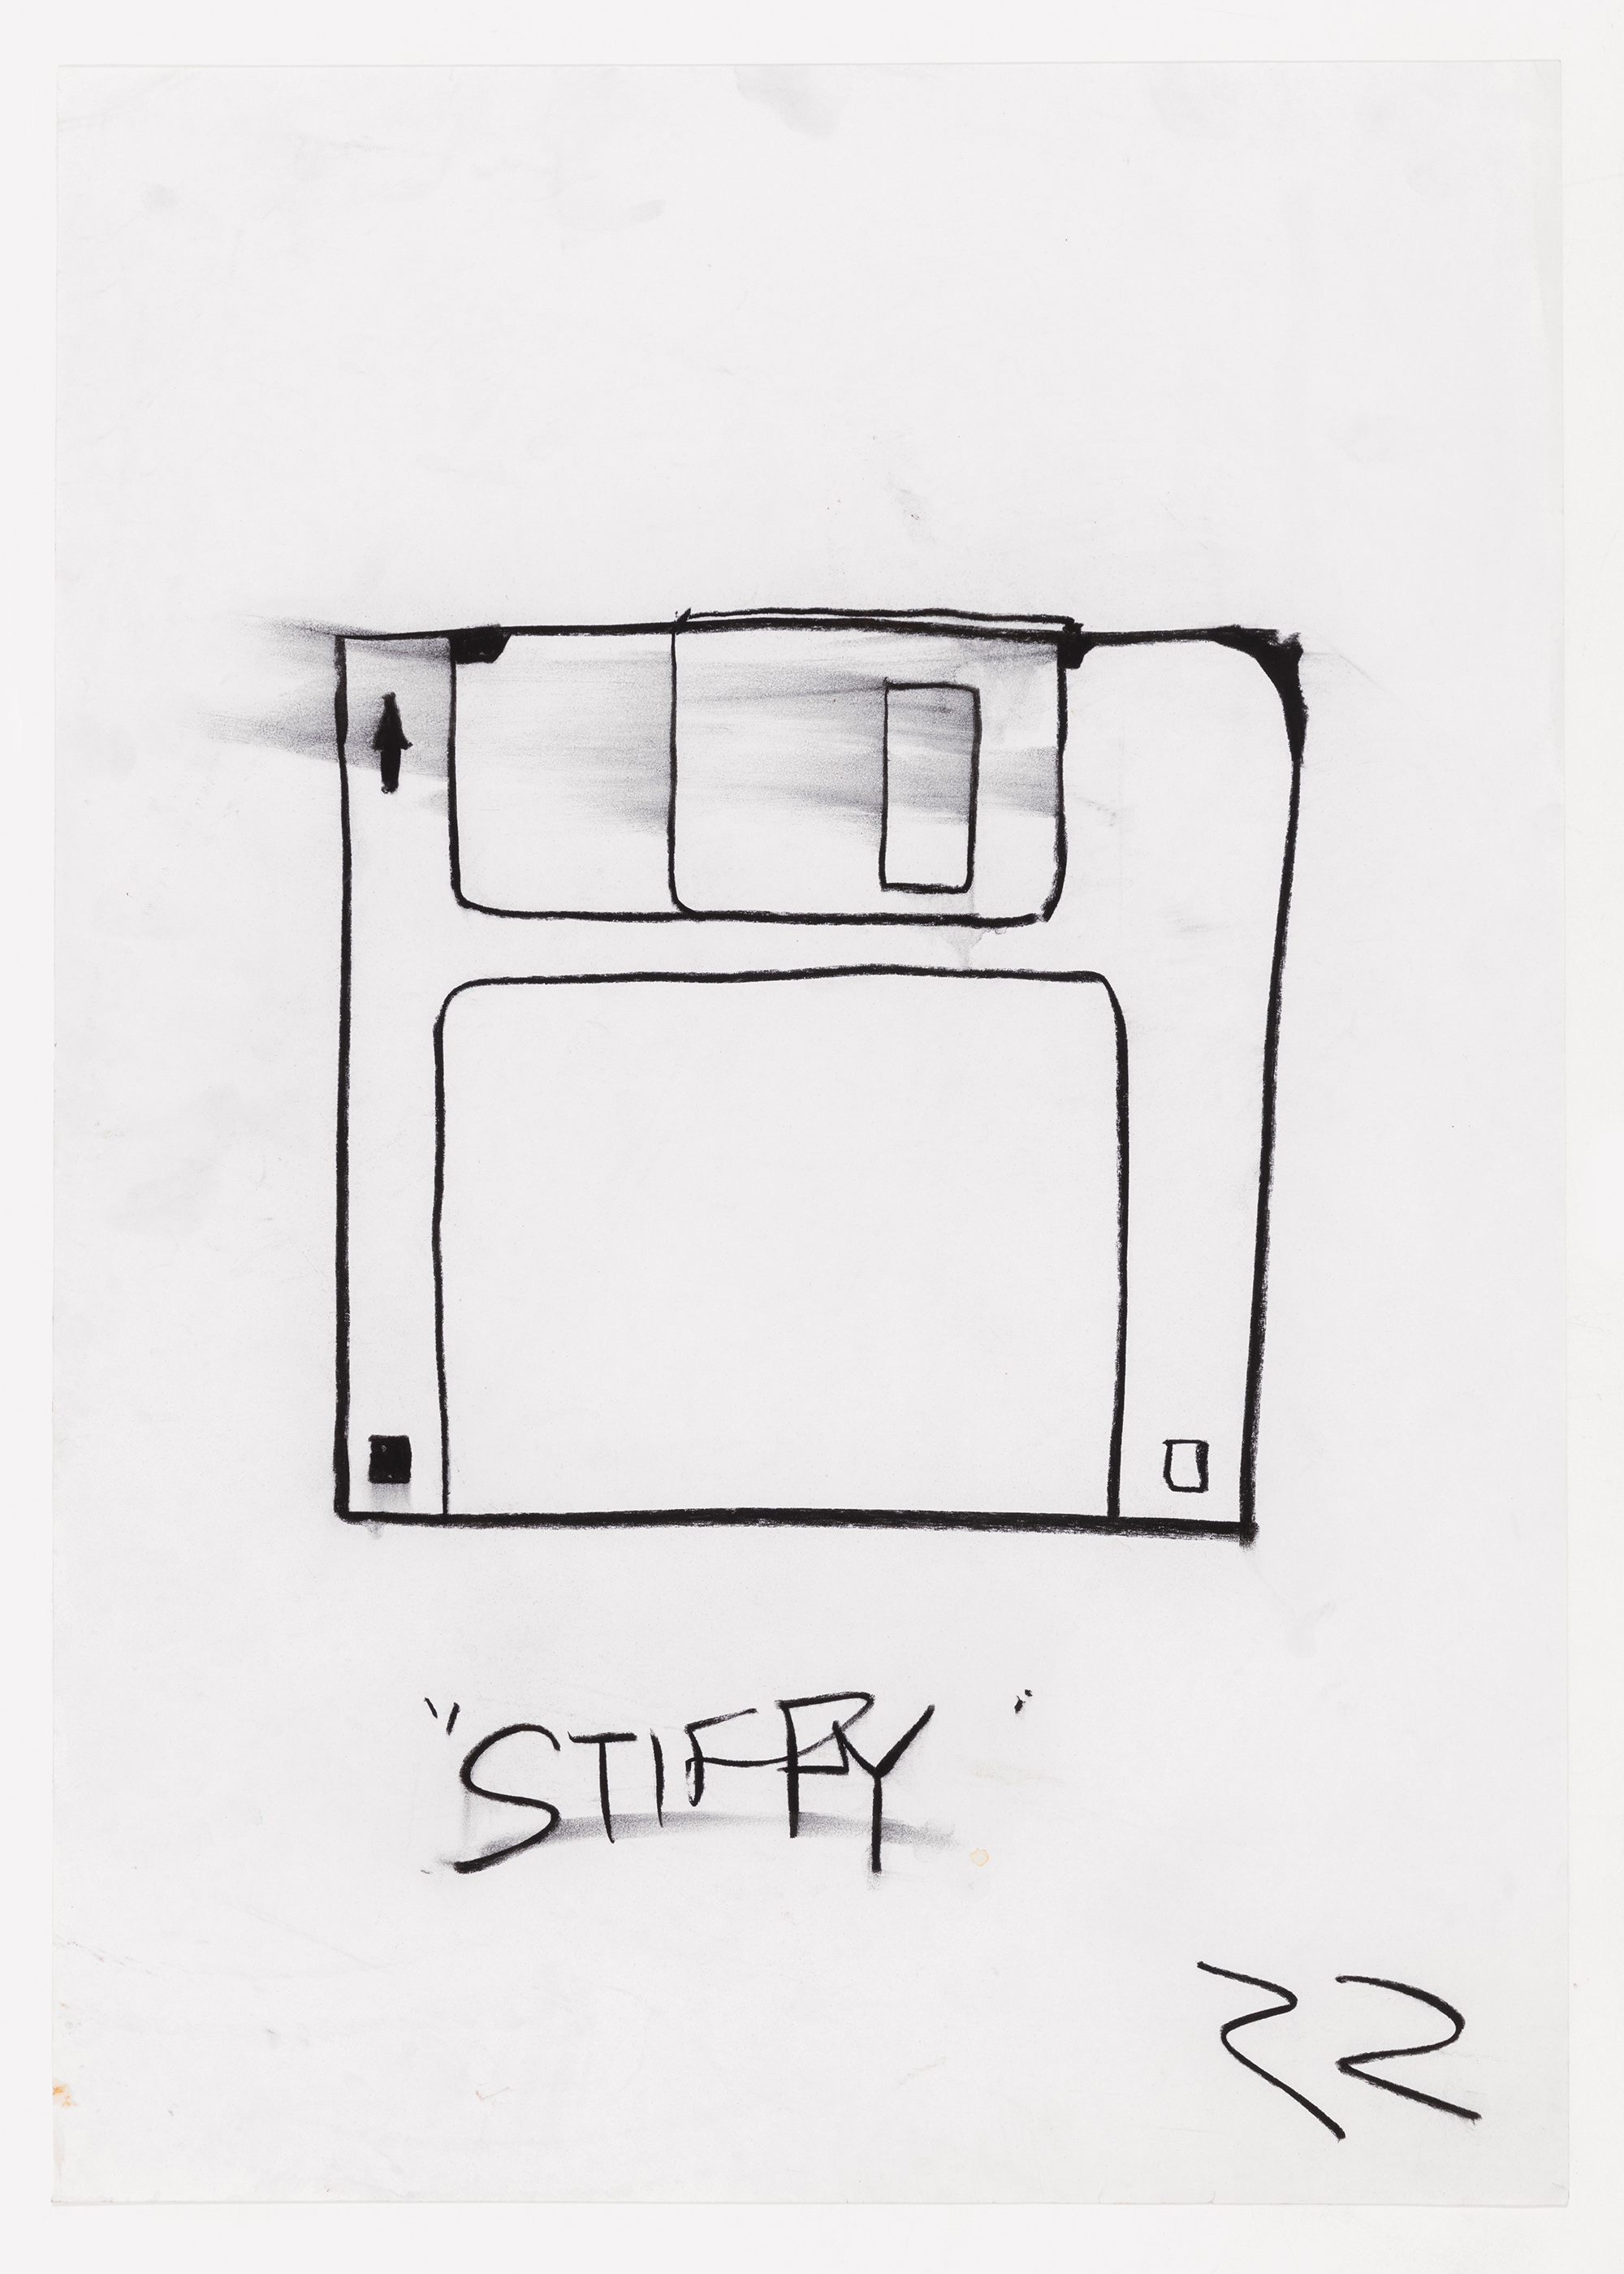  - STIFFY, 2000